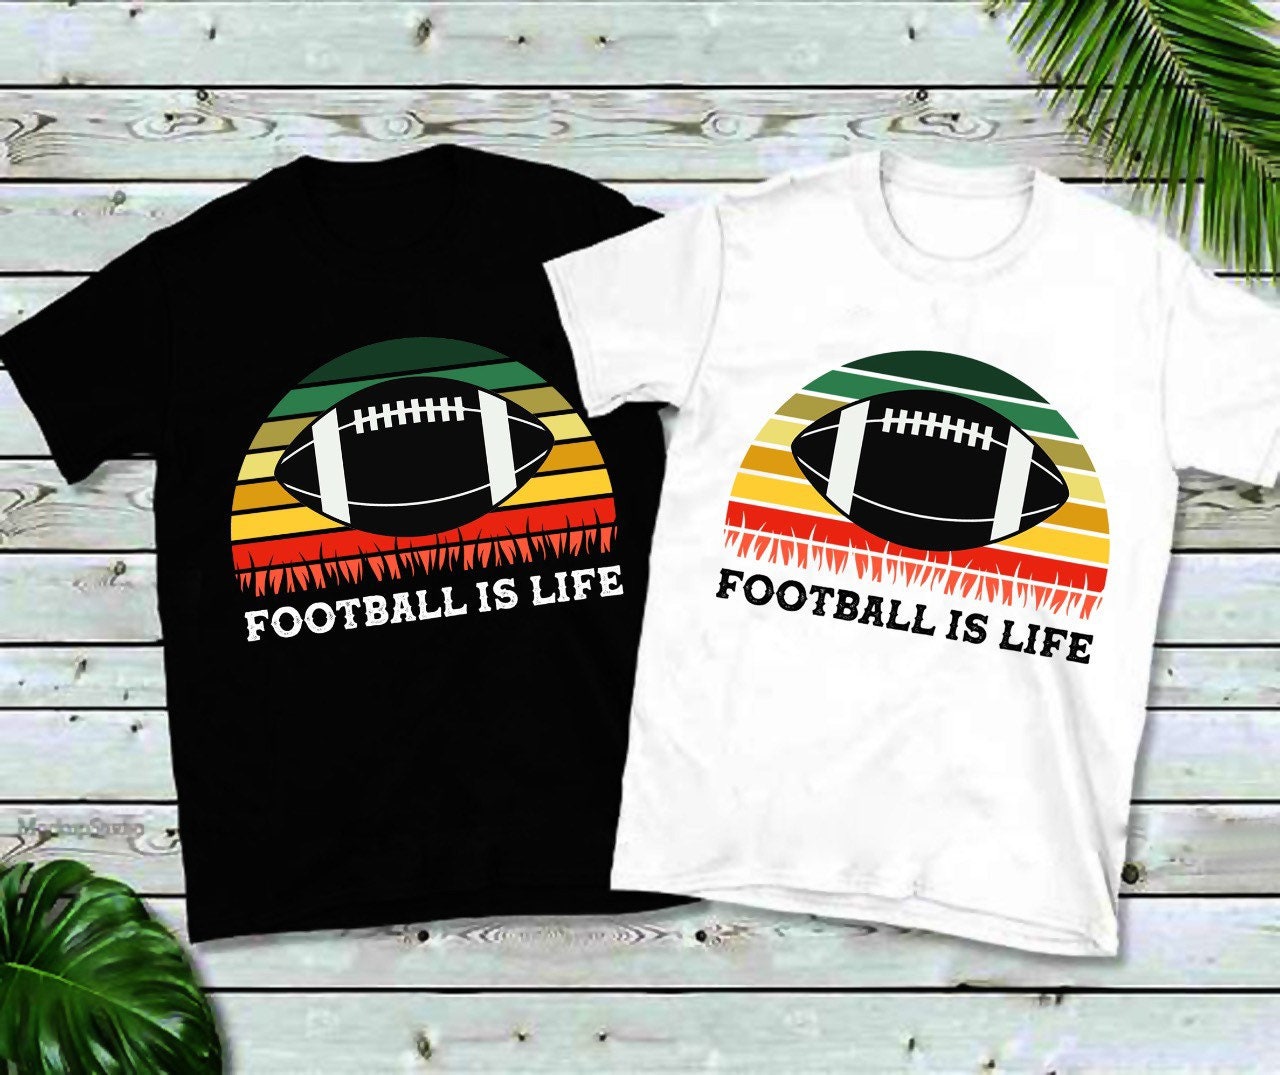 फुटबॉल ही जीवन है | रेट्रो सूर्यास्त, फुटबॉल शर्ट, कट्टरपंथी, उसके लिए उपहार, उसके लिए उपहार, खेल, फुटबॉल उपहार, फुटबॉल पिता, फुटबॉल माँ - प्लसमिनसको.कॉम